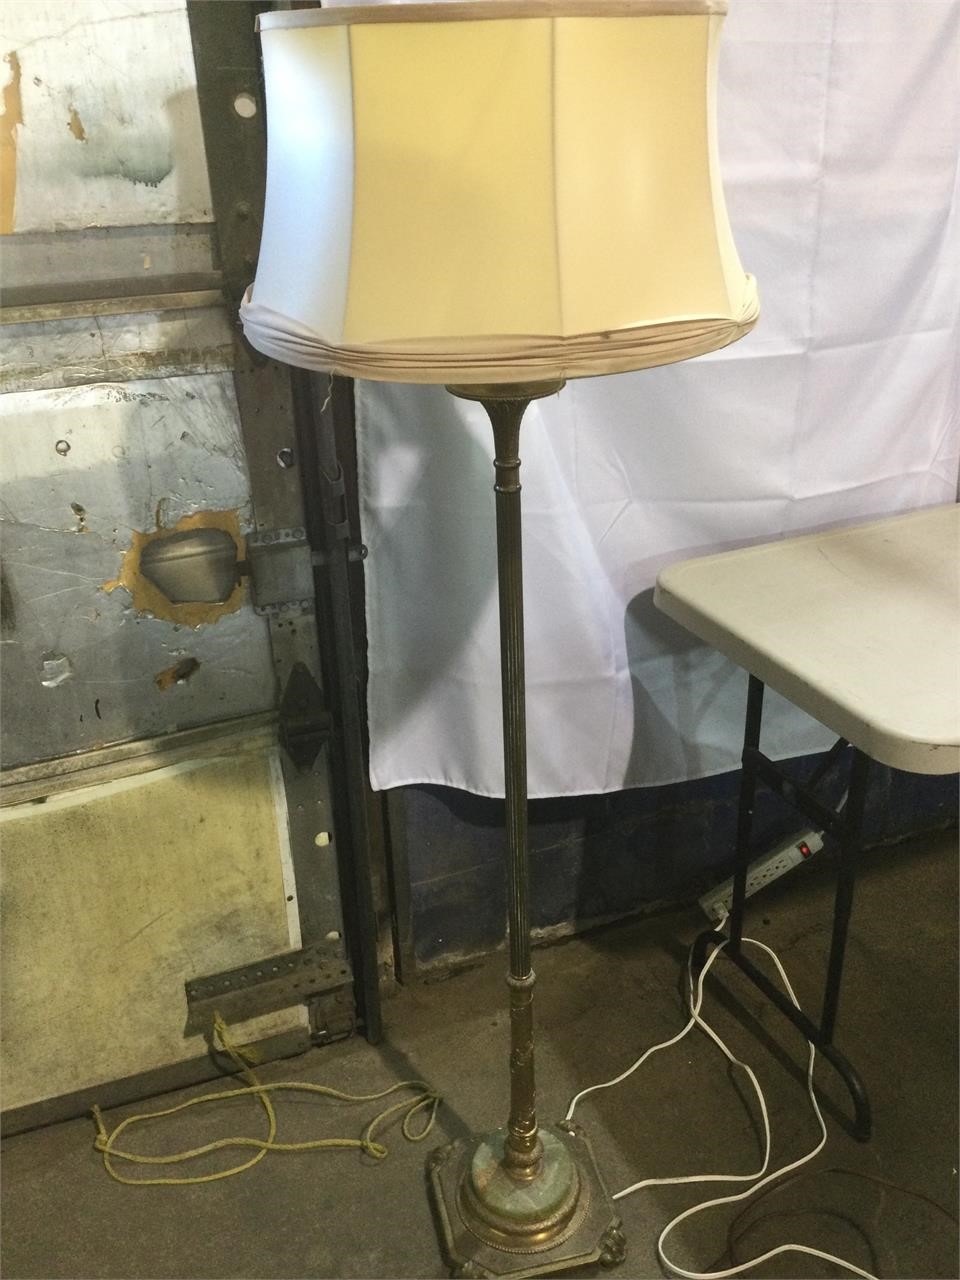 Antique Floor Lamp, Cracked Glass